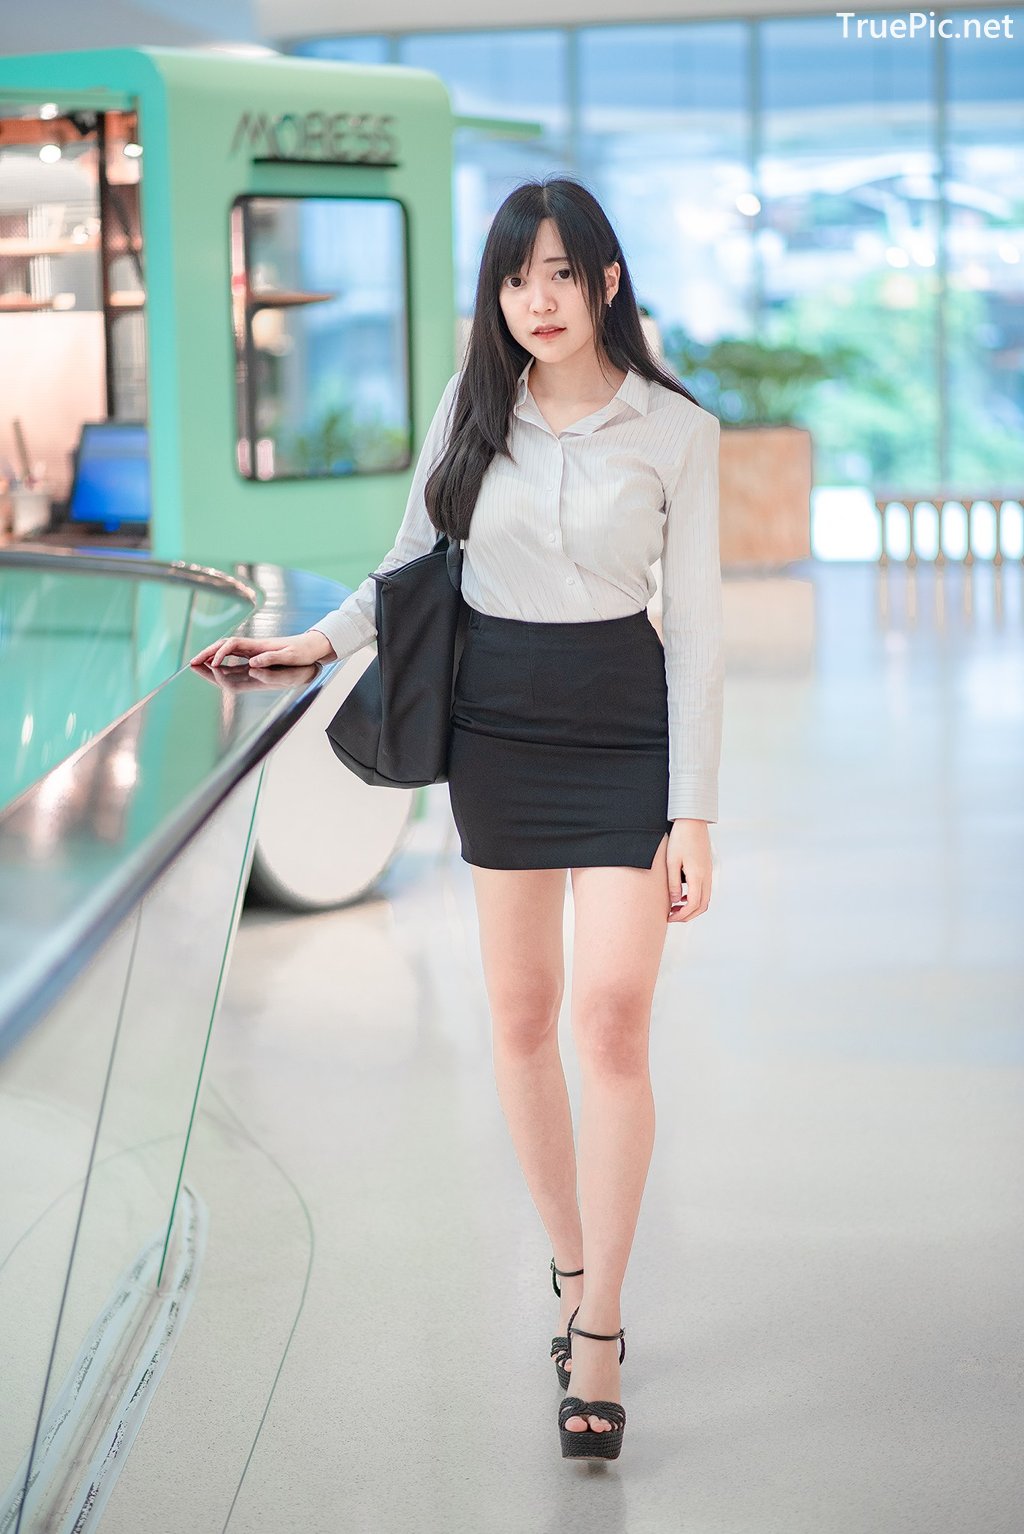 Image Thailand Model - Sarunrat Baifern Ong - Concept Kim’s Secretary - TruePic.net - Picture-33